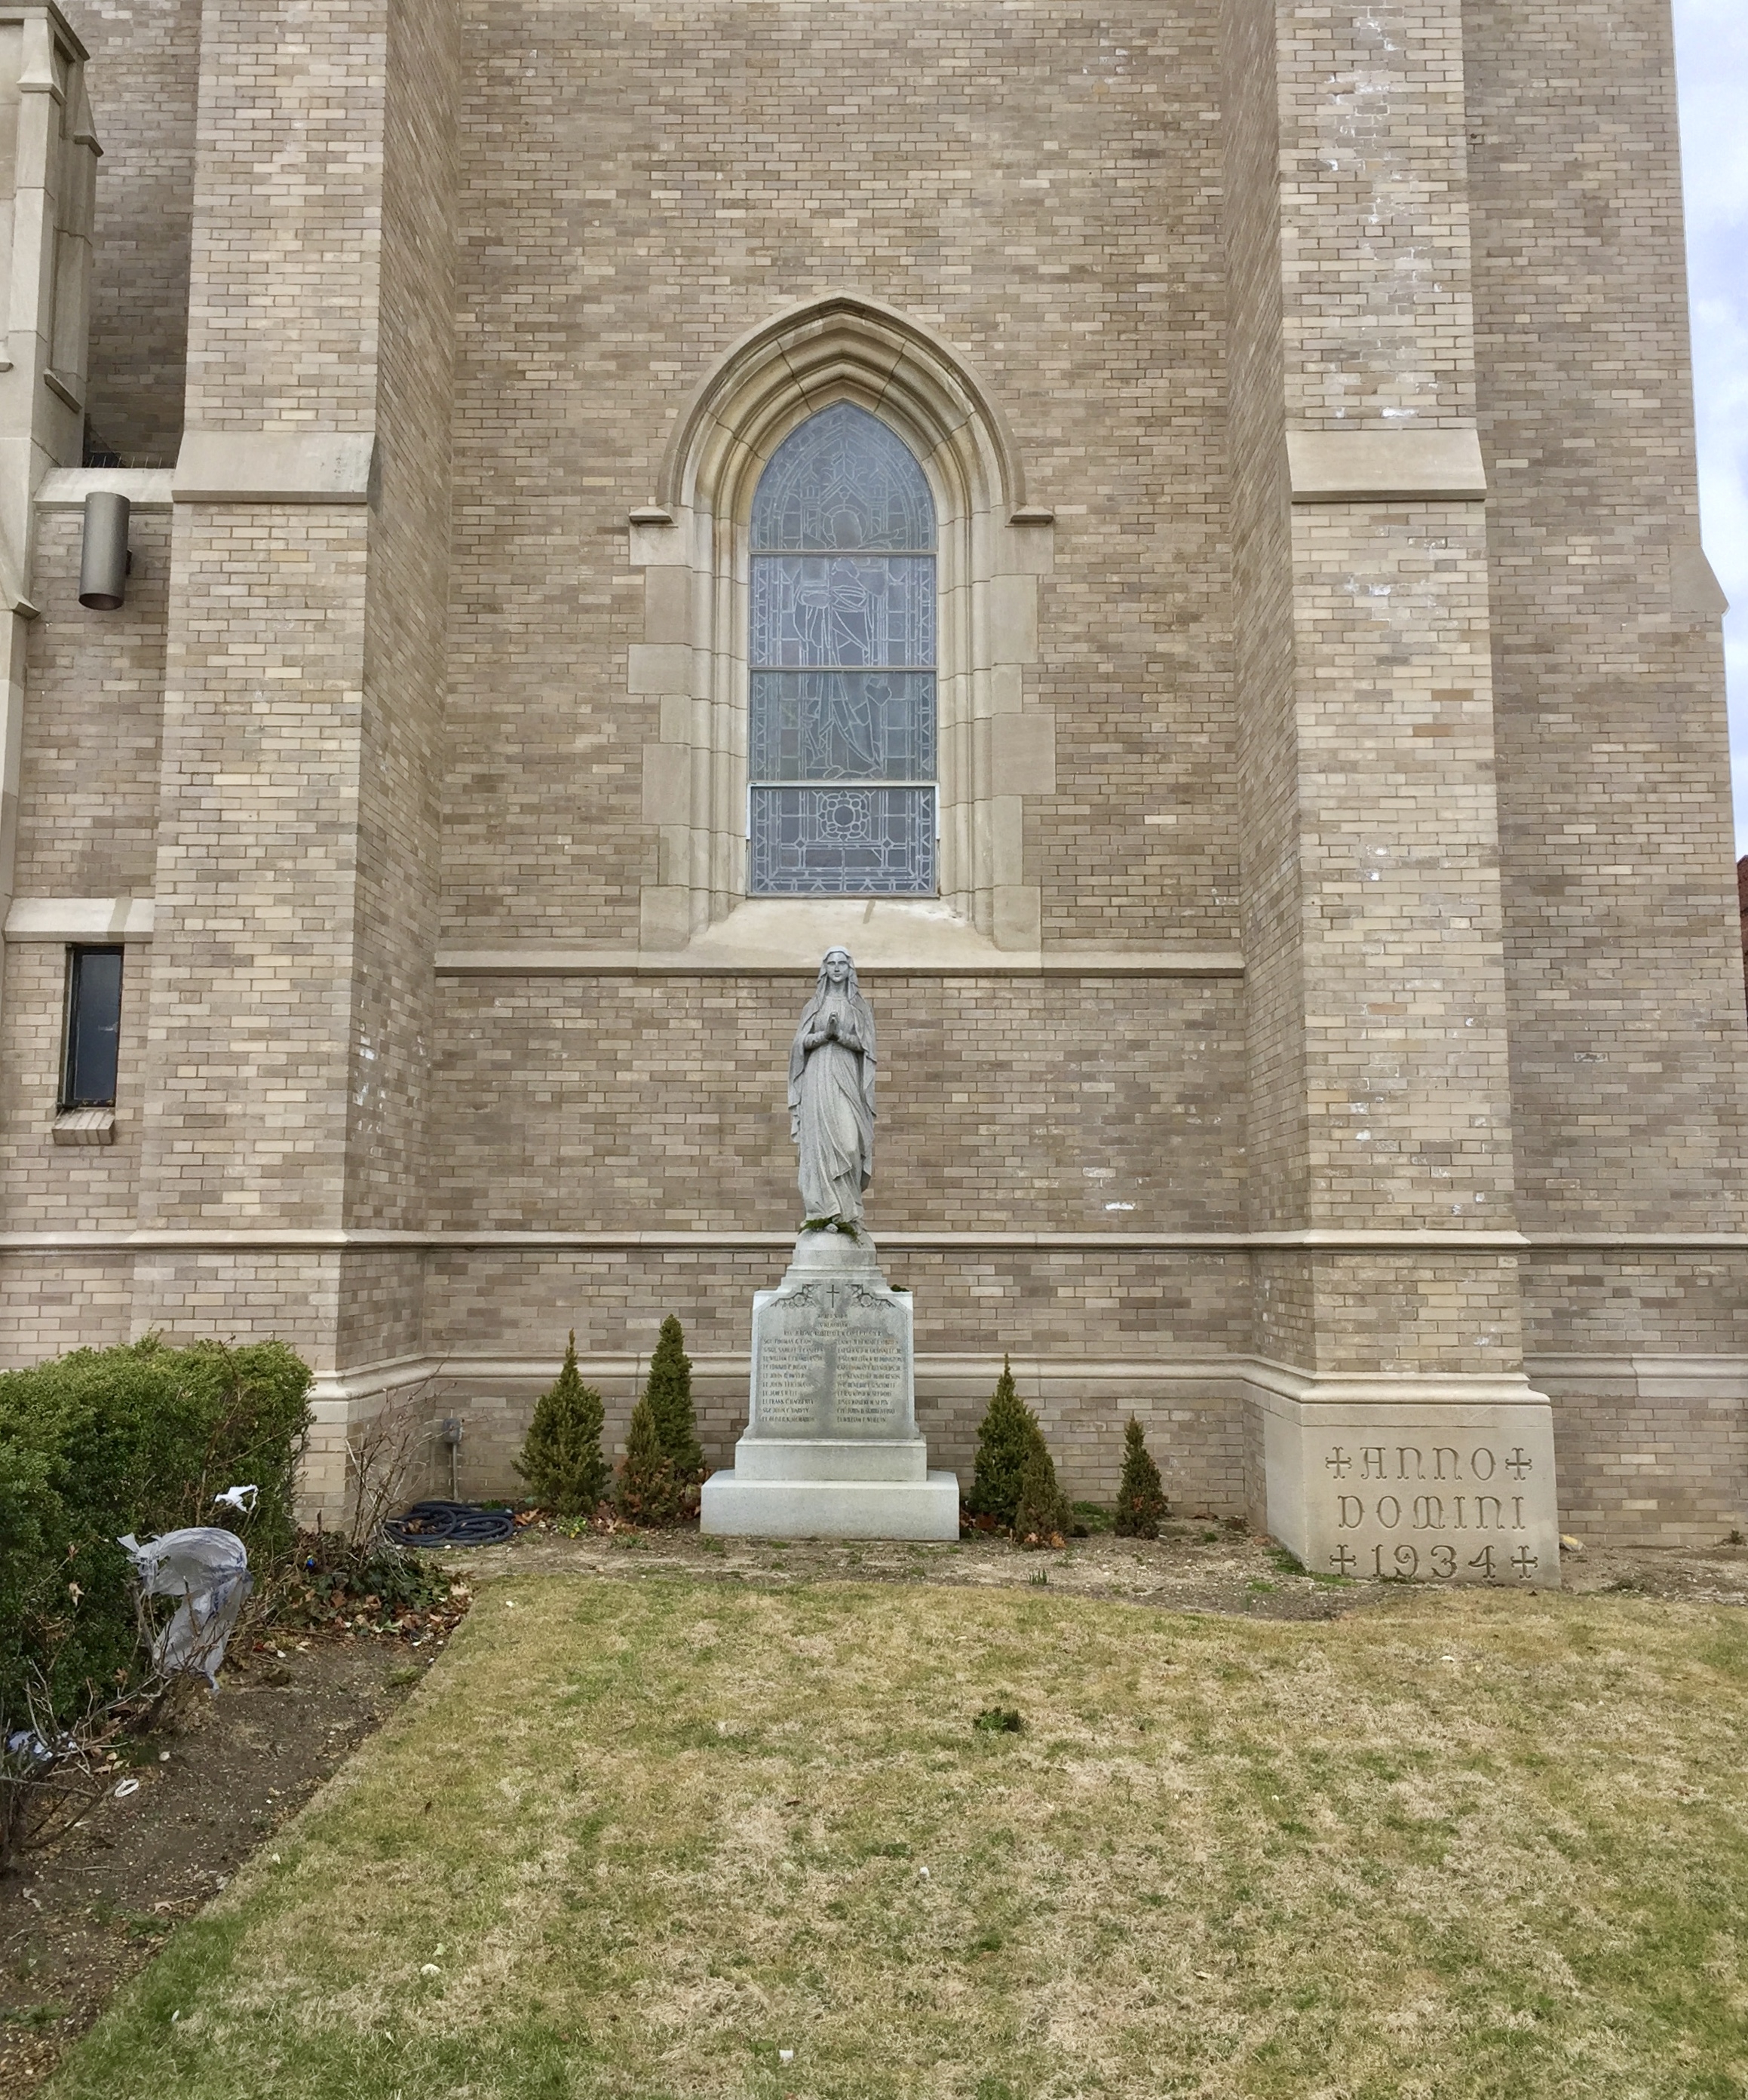 St. Agnes World War II Memorial Marker - Wide View